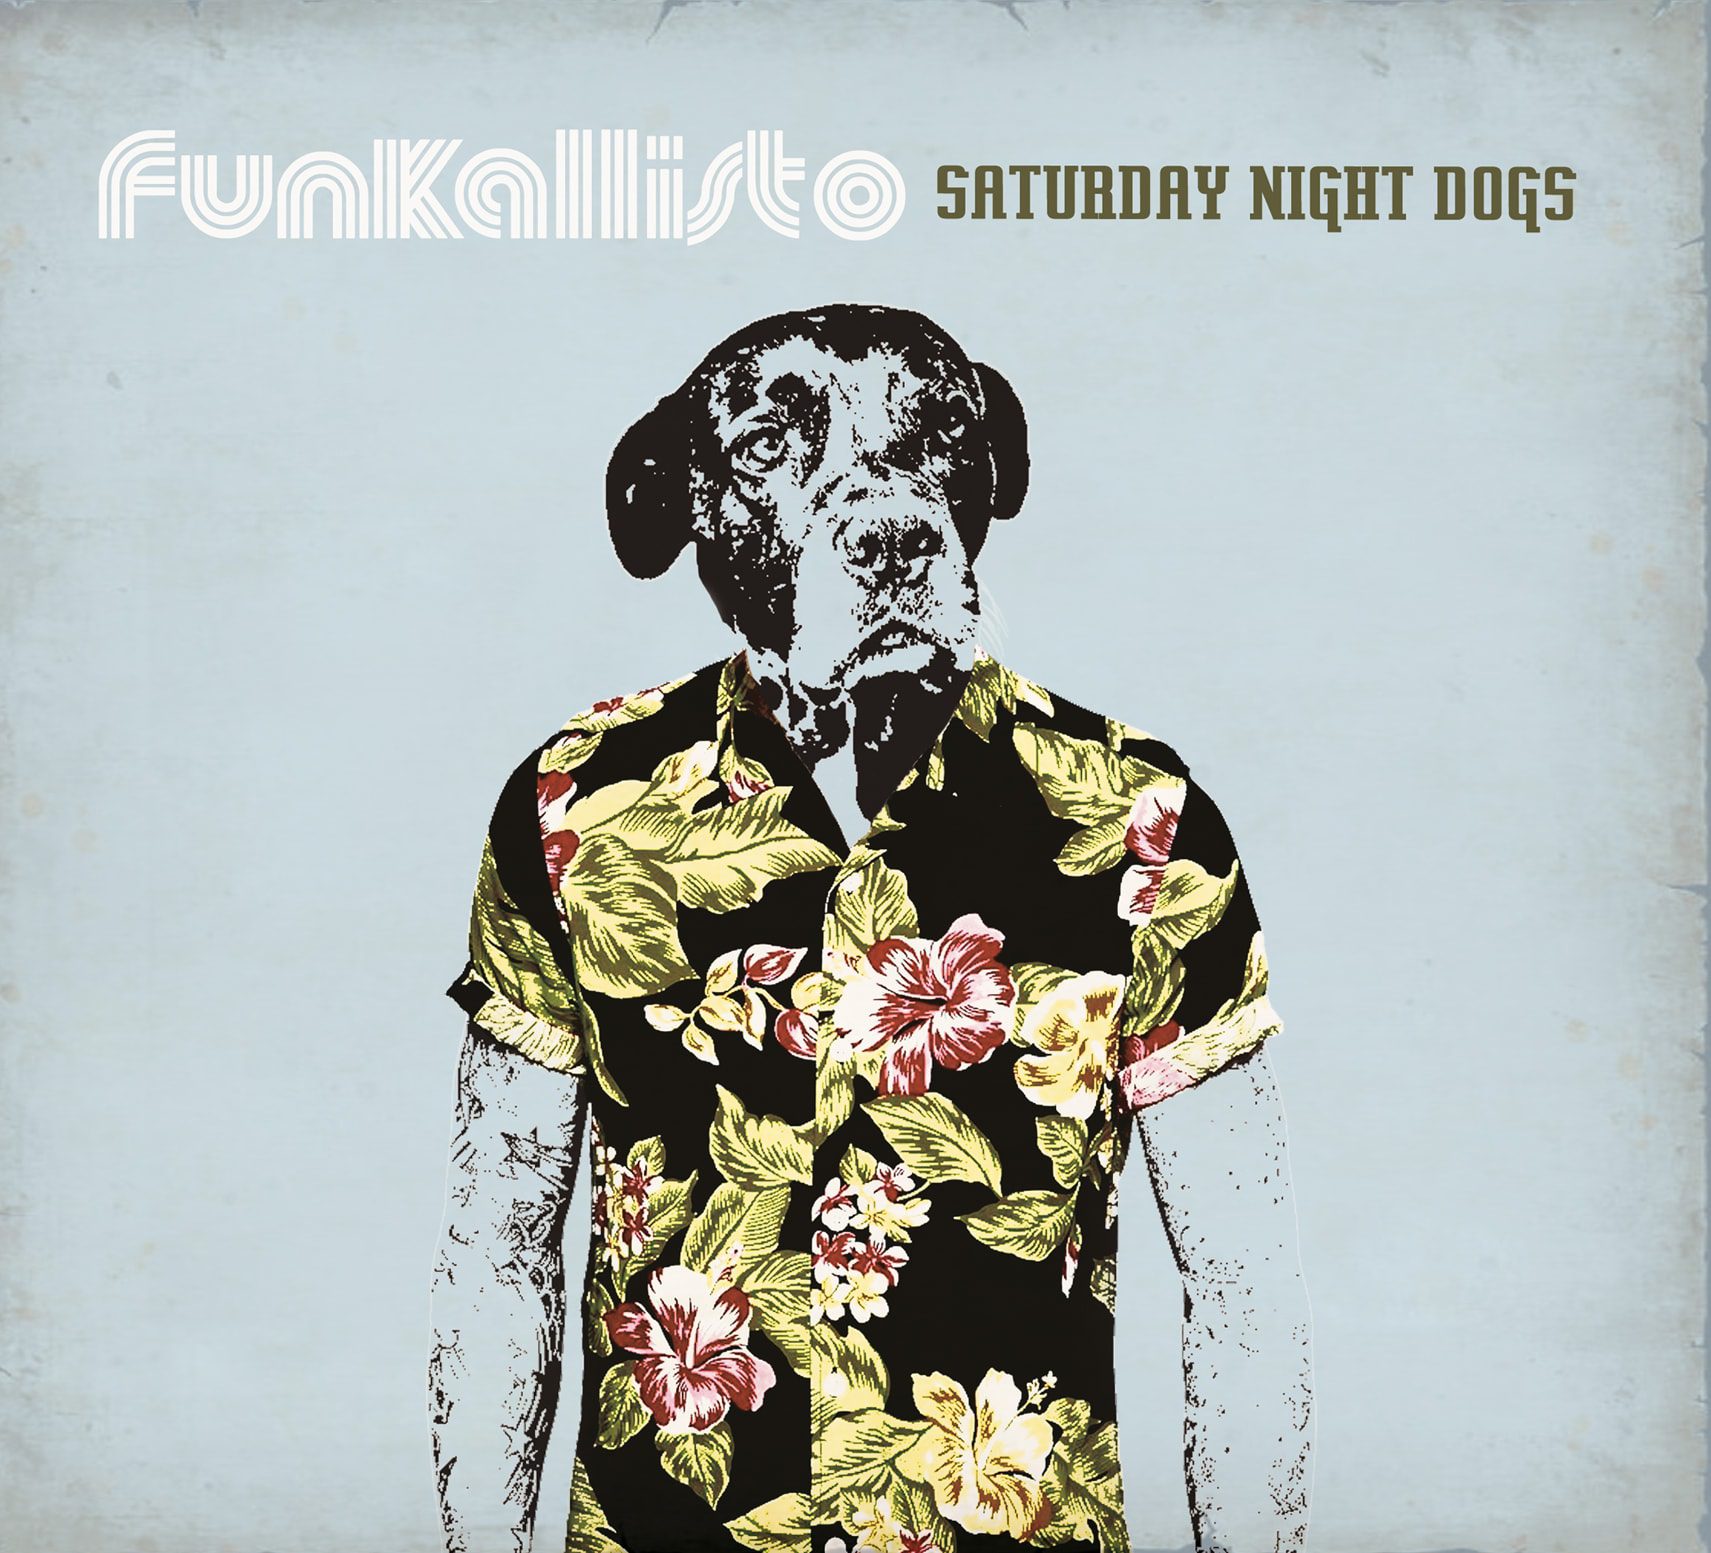 Bananagun - Funkallisto - Saturday Night Dogs